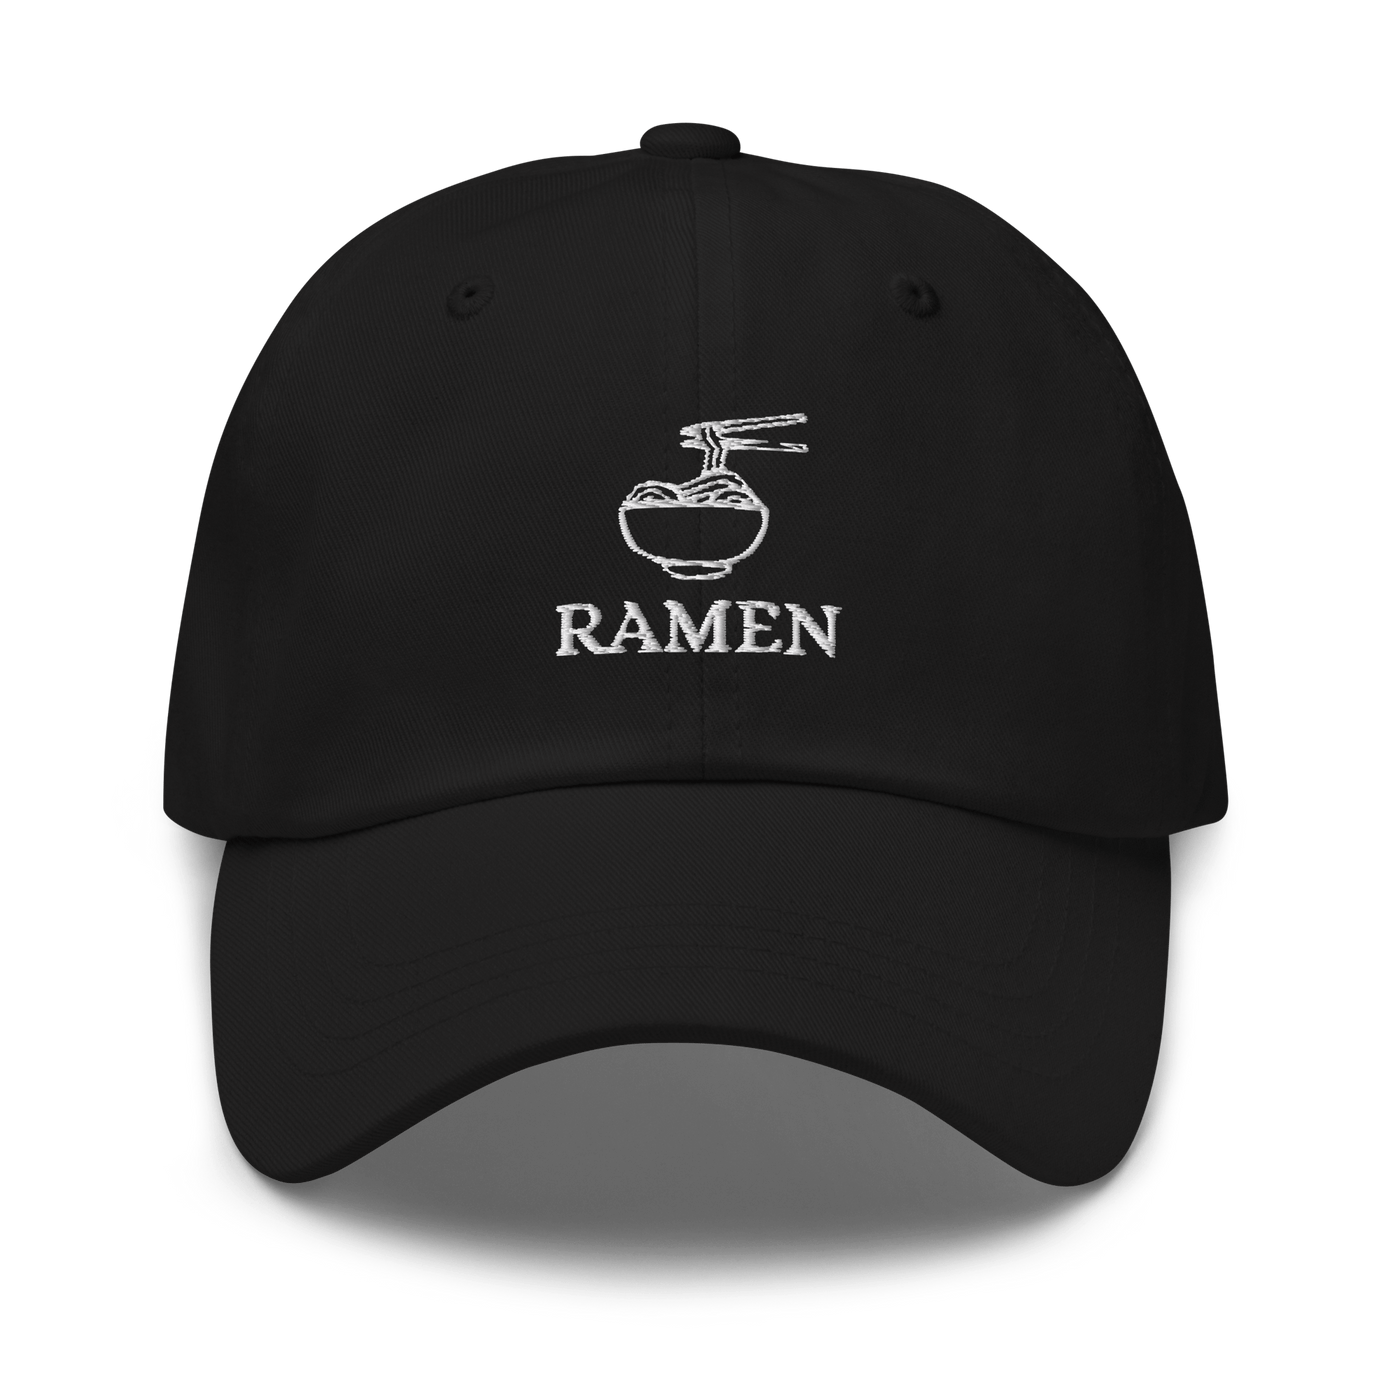 Ramen Bowl Dad hat - Black - - Just Another Cap Store